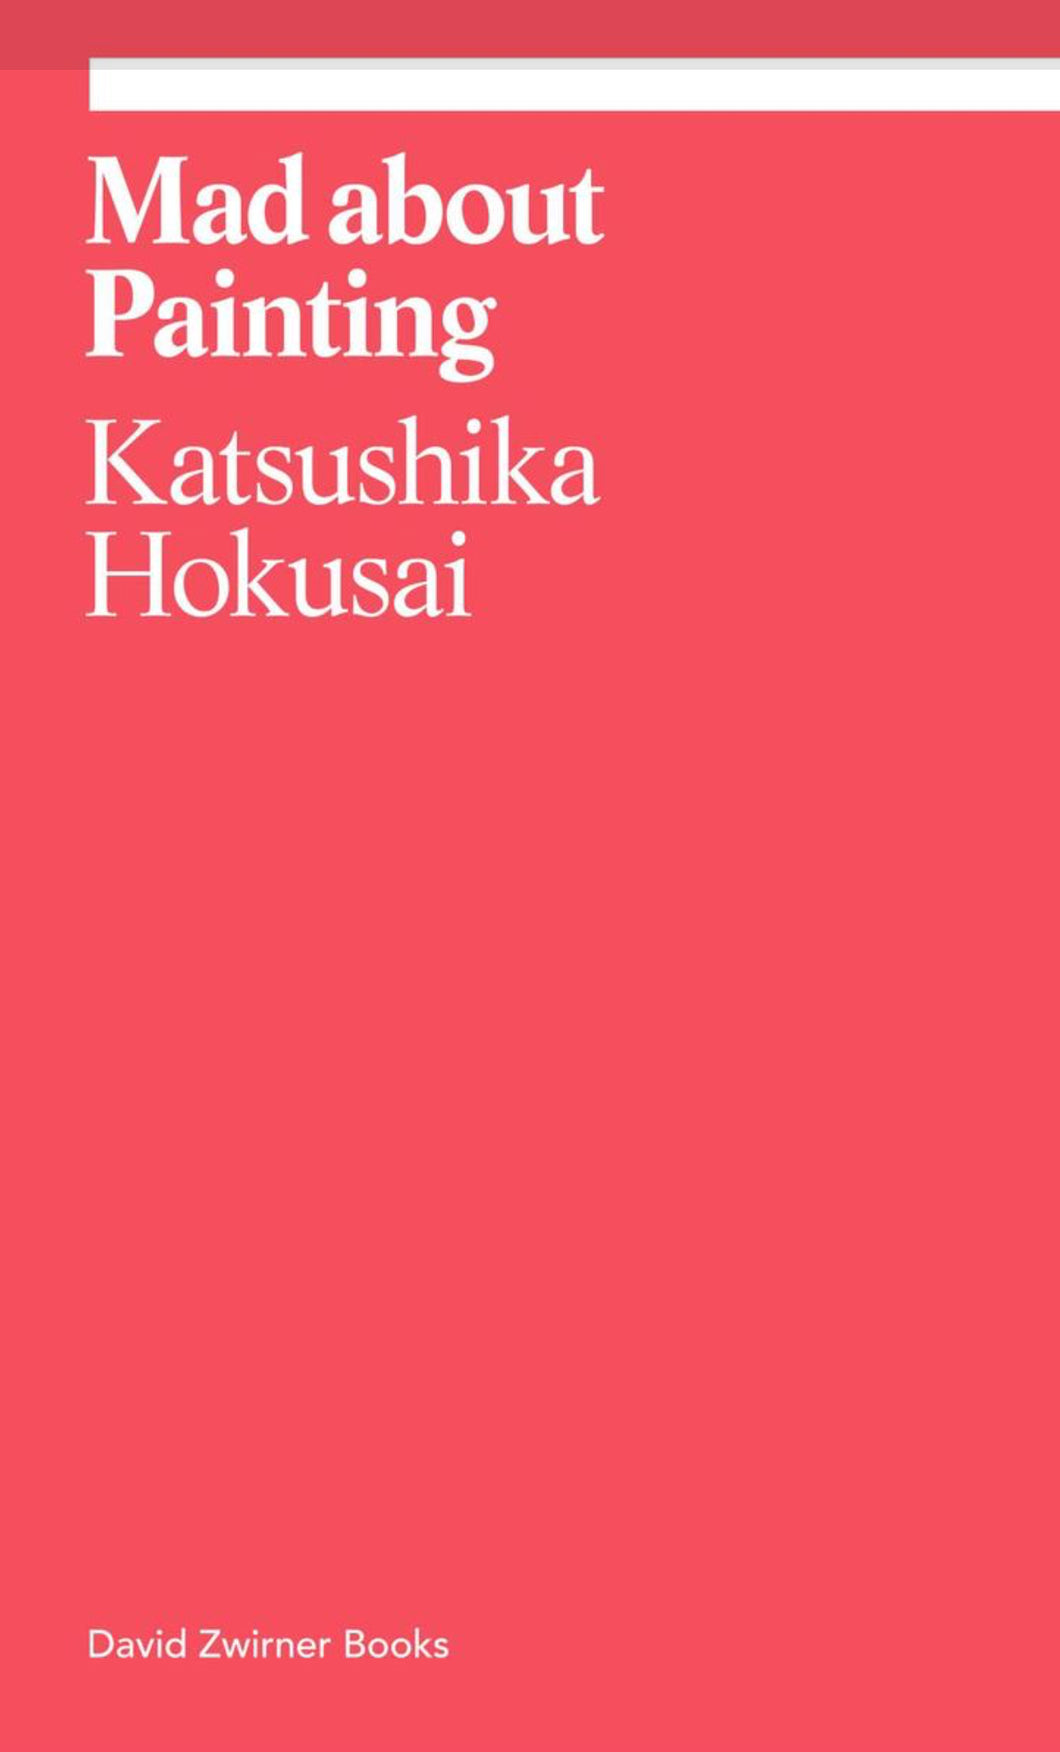 Basket Books: “Mad about Painting” by Katsushika Hokusai